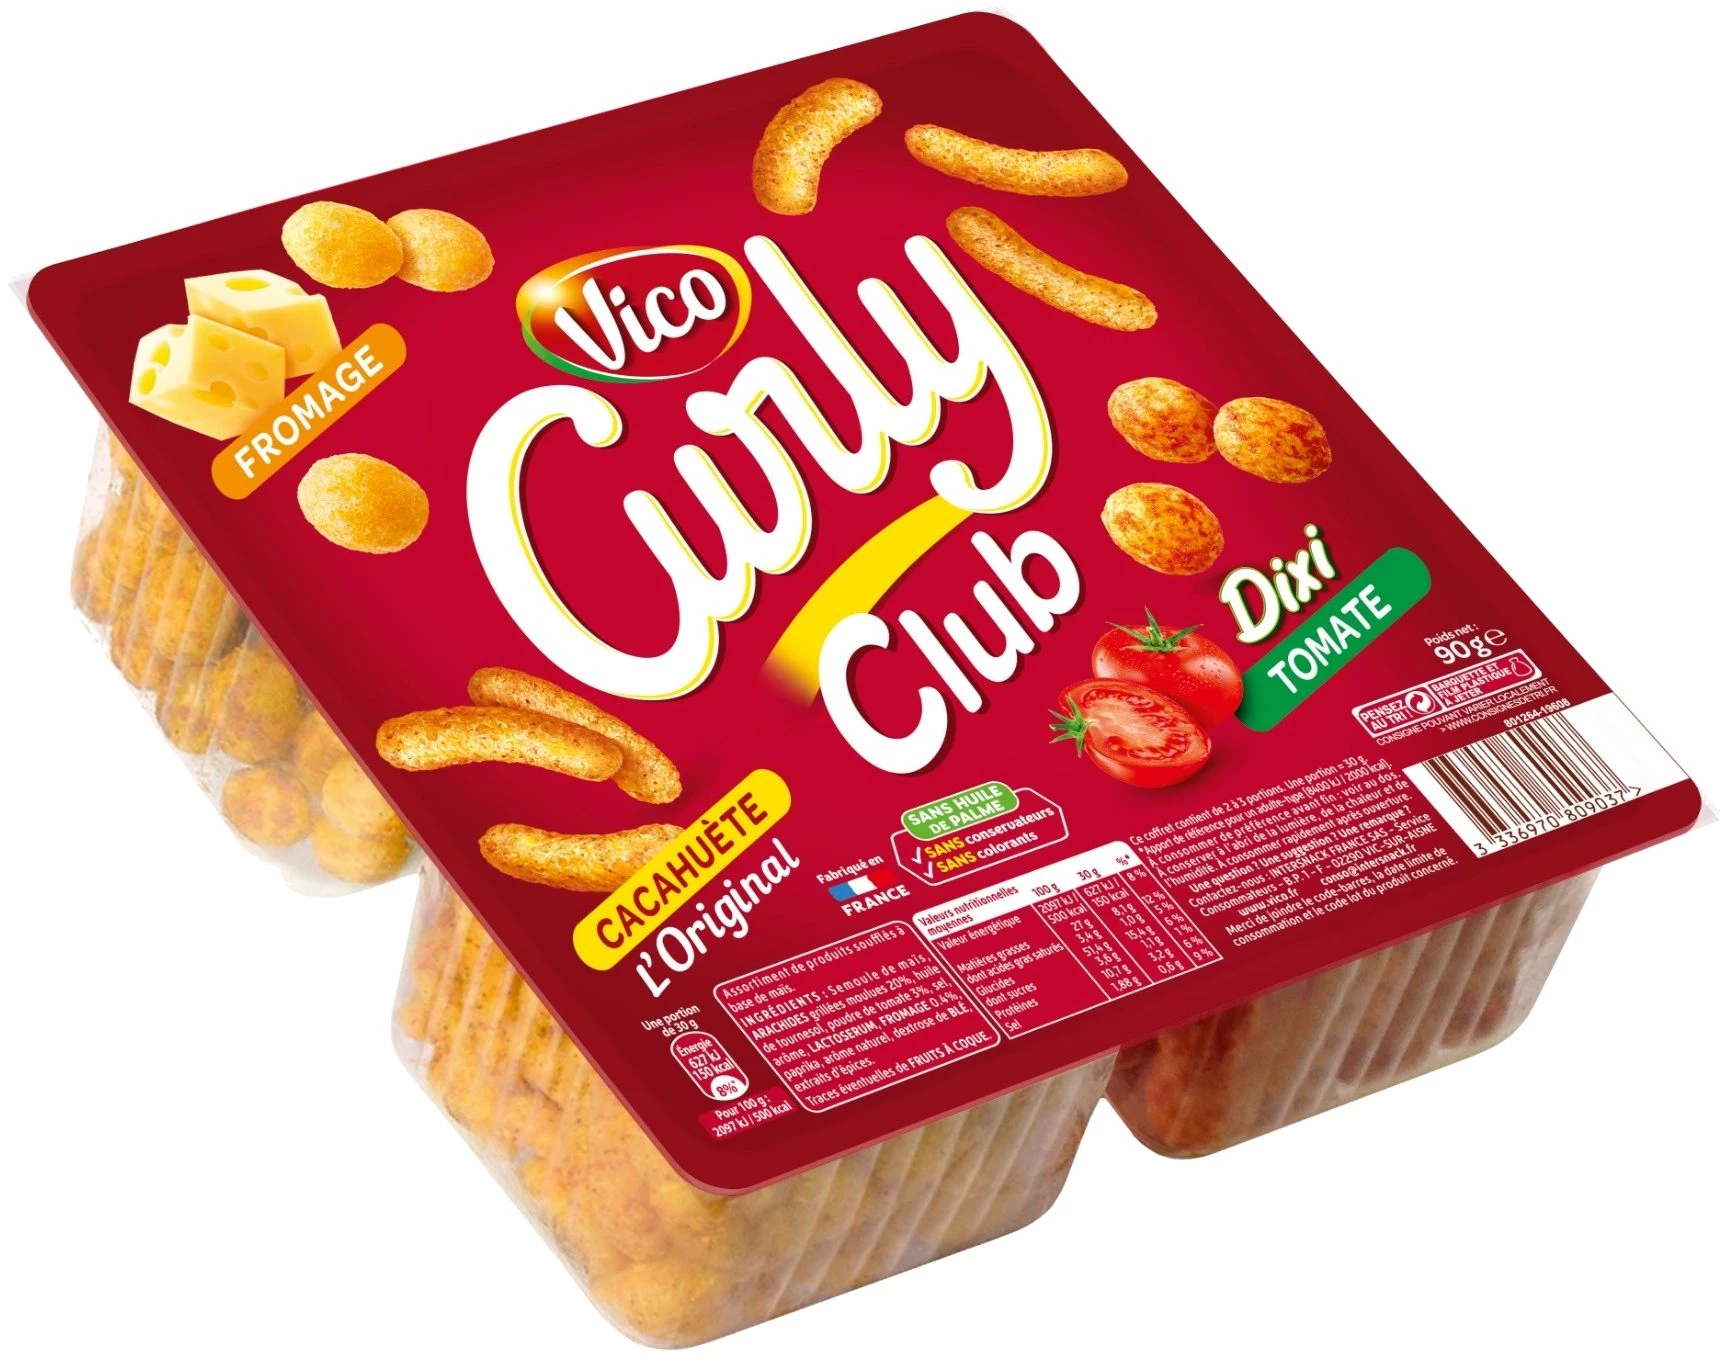 Curly club, 90g - VICO